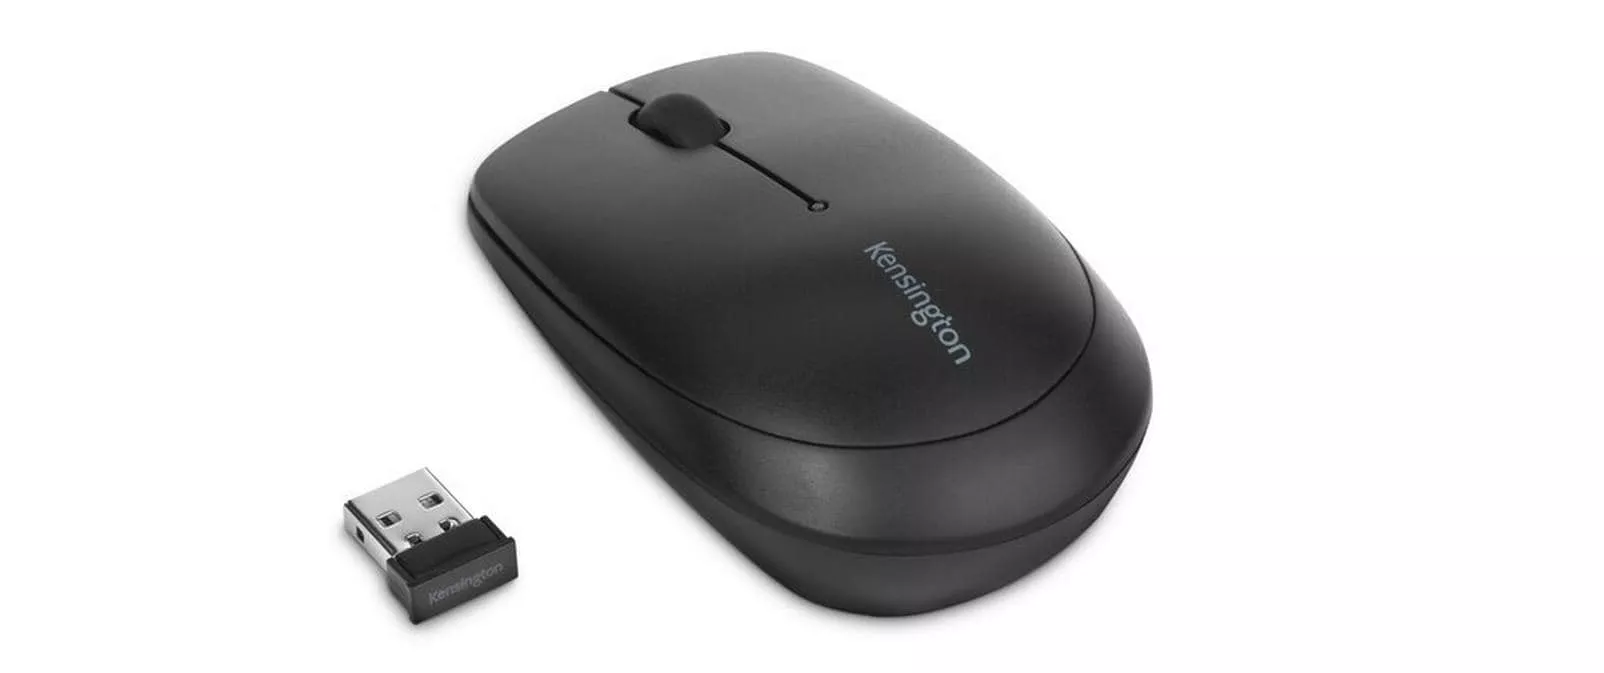 Mouse ergonomico Kensington Pro Fit Mobile nero